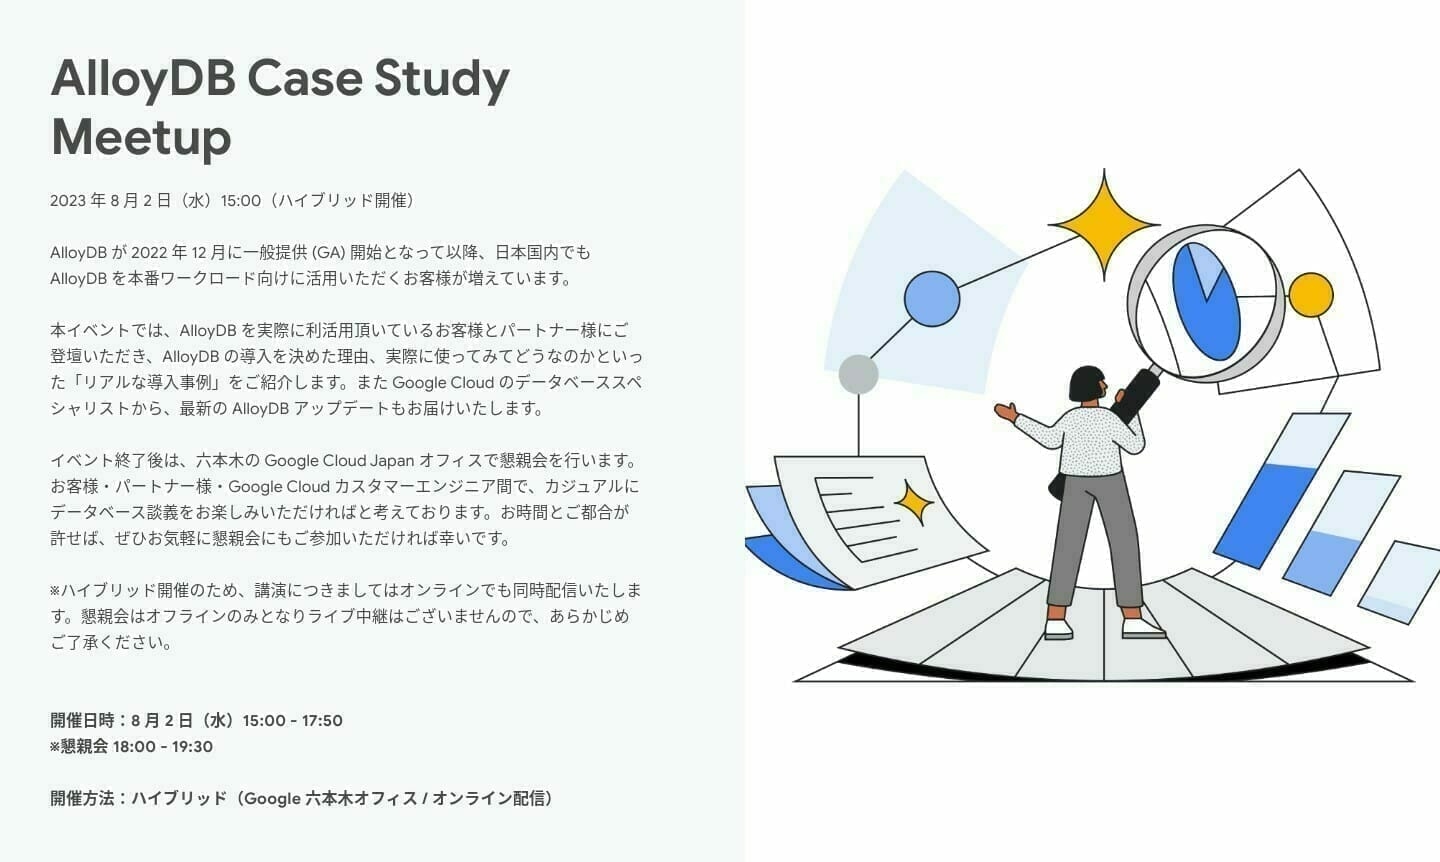 [Google Cloud] AlloyDB Case Study Meetup